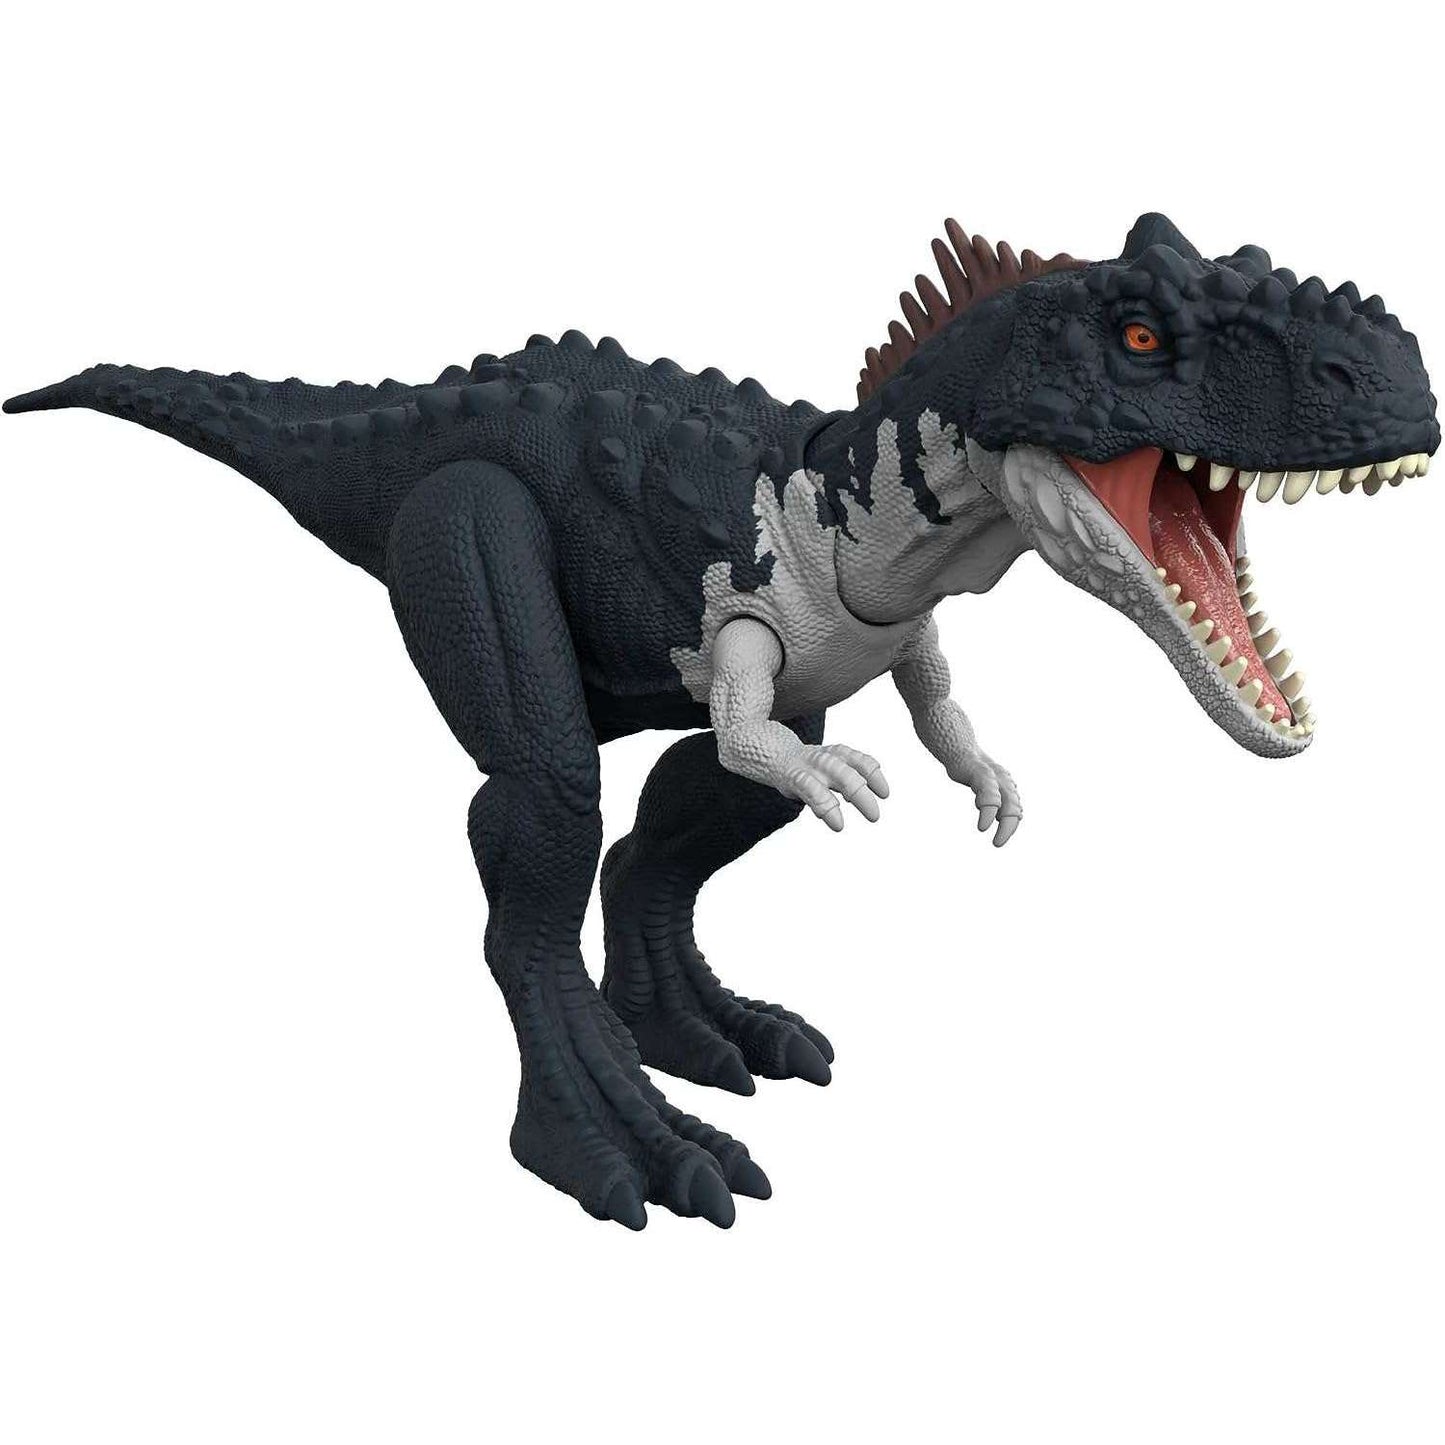 Toys N Tuck:Jurassic World Roar Strikers Rajasaurus,Jurassic World